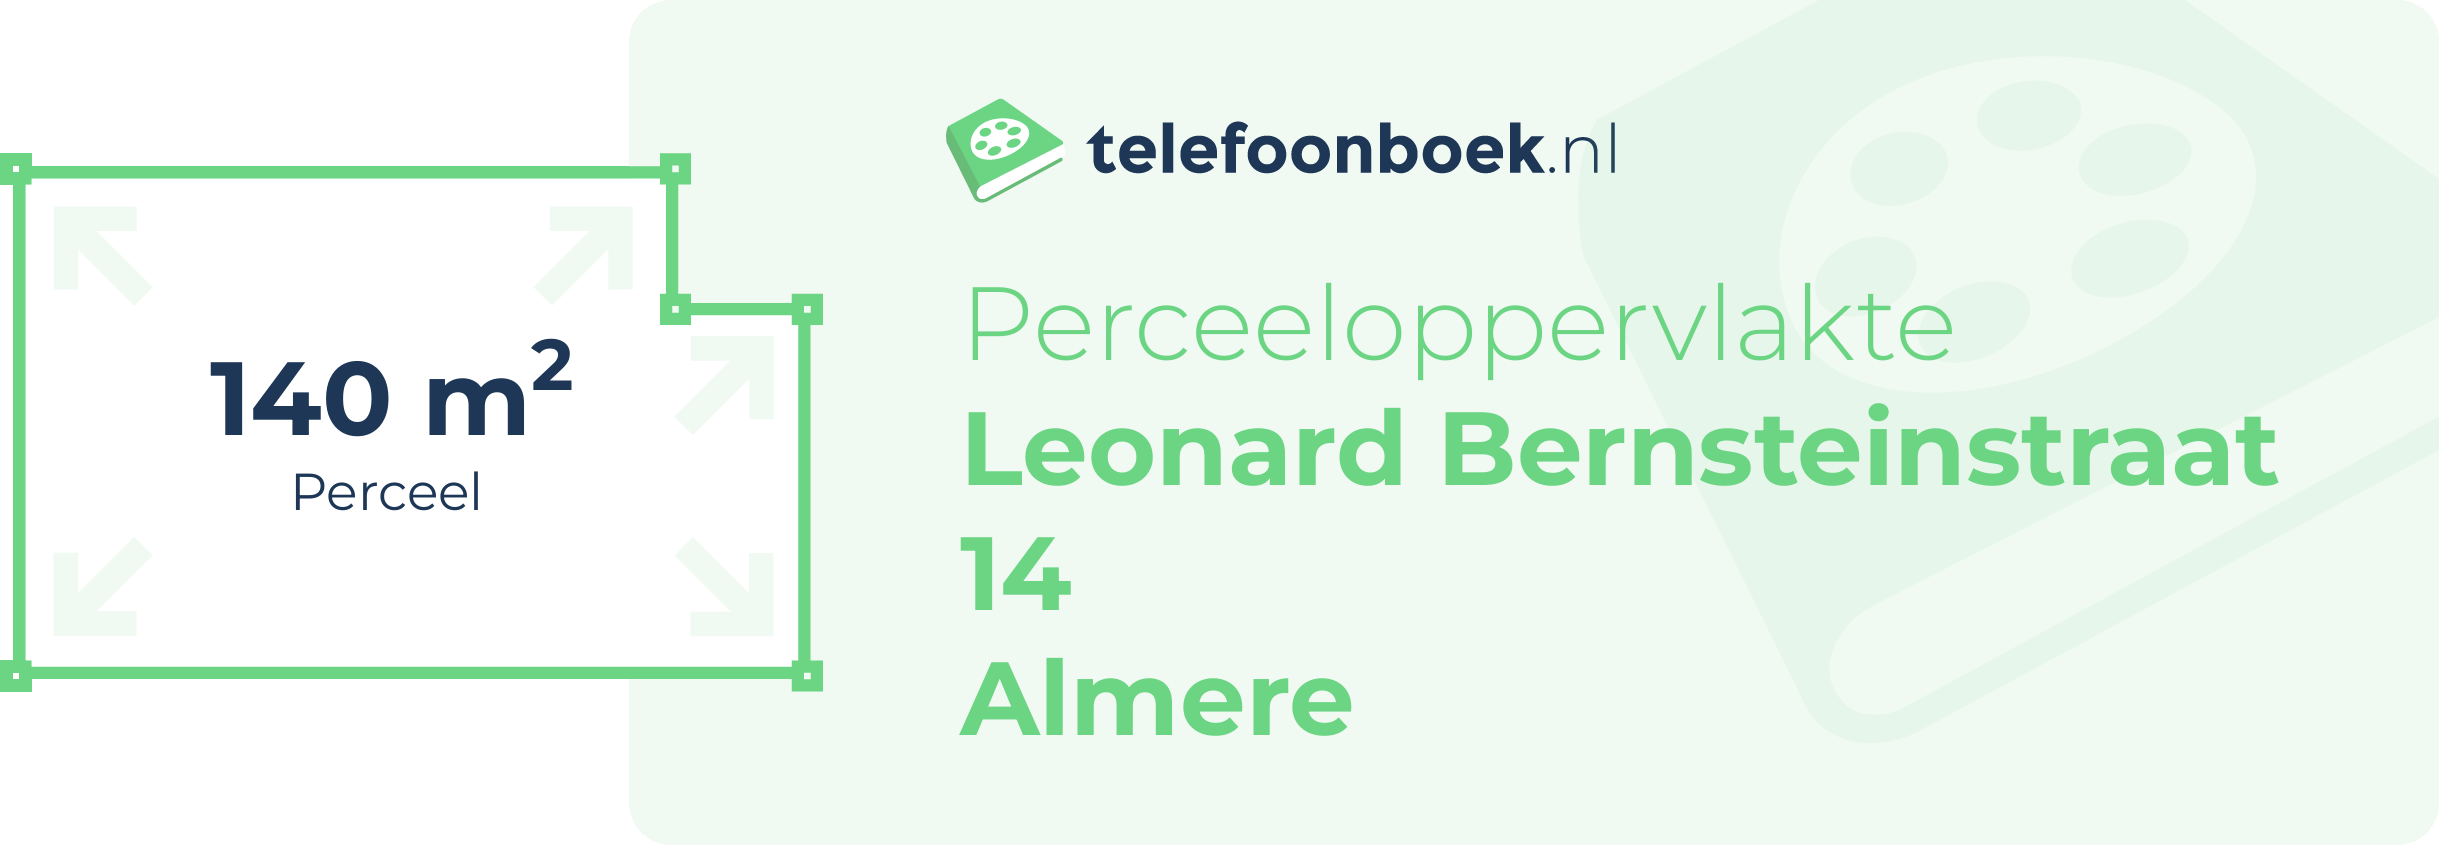 Perceeloppervlakte Leonard Bernsteinstraat 14 Almere